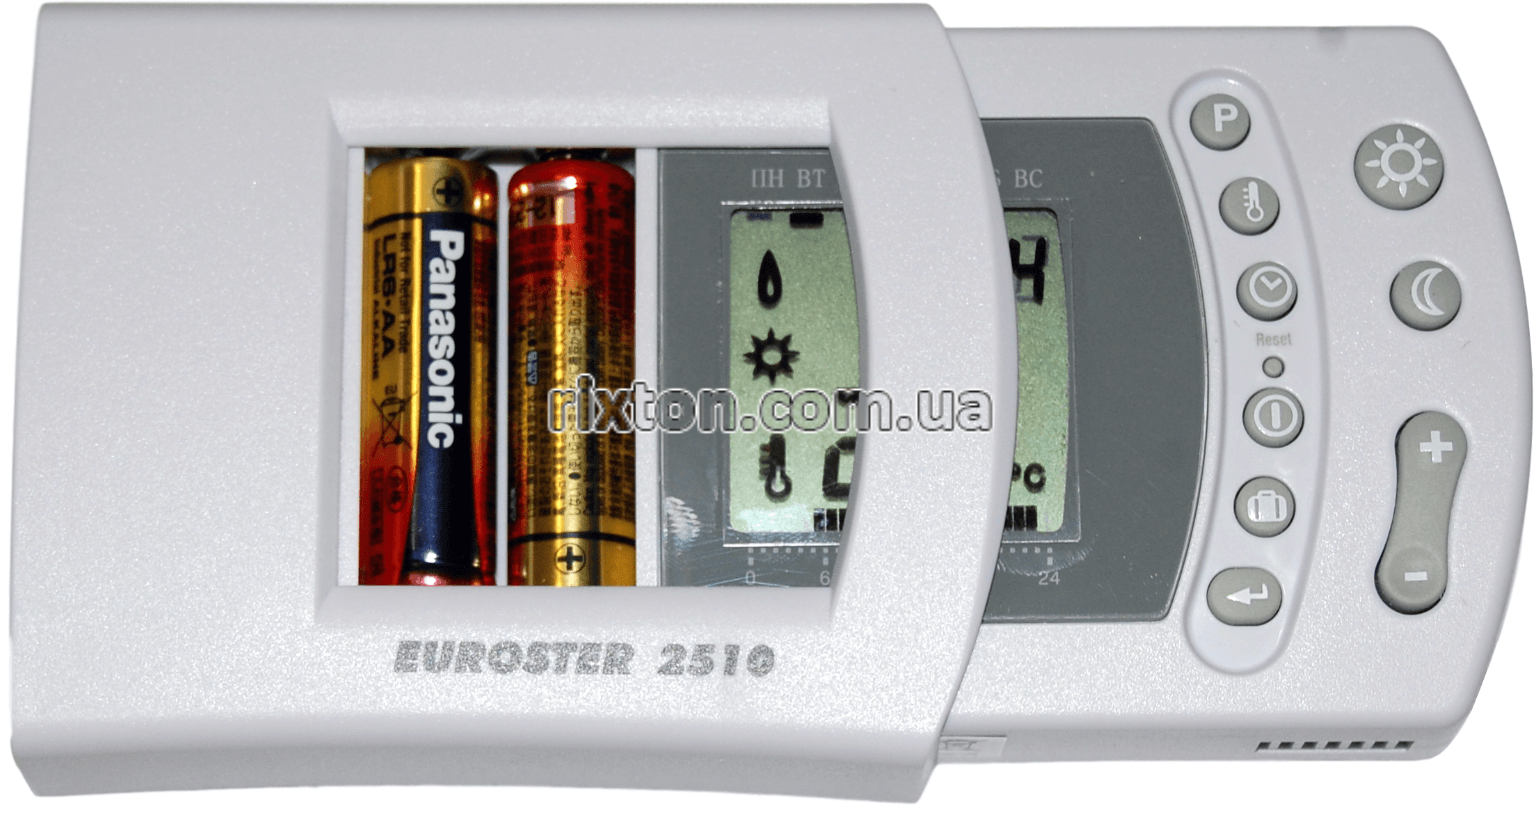 Комнатный регулятор температуры Euroster 2510 TXRX